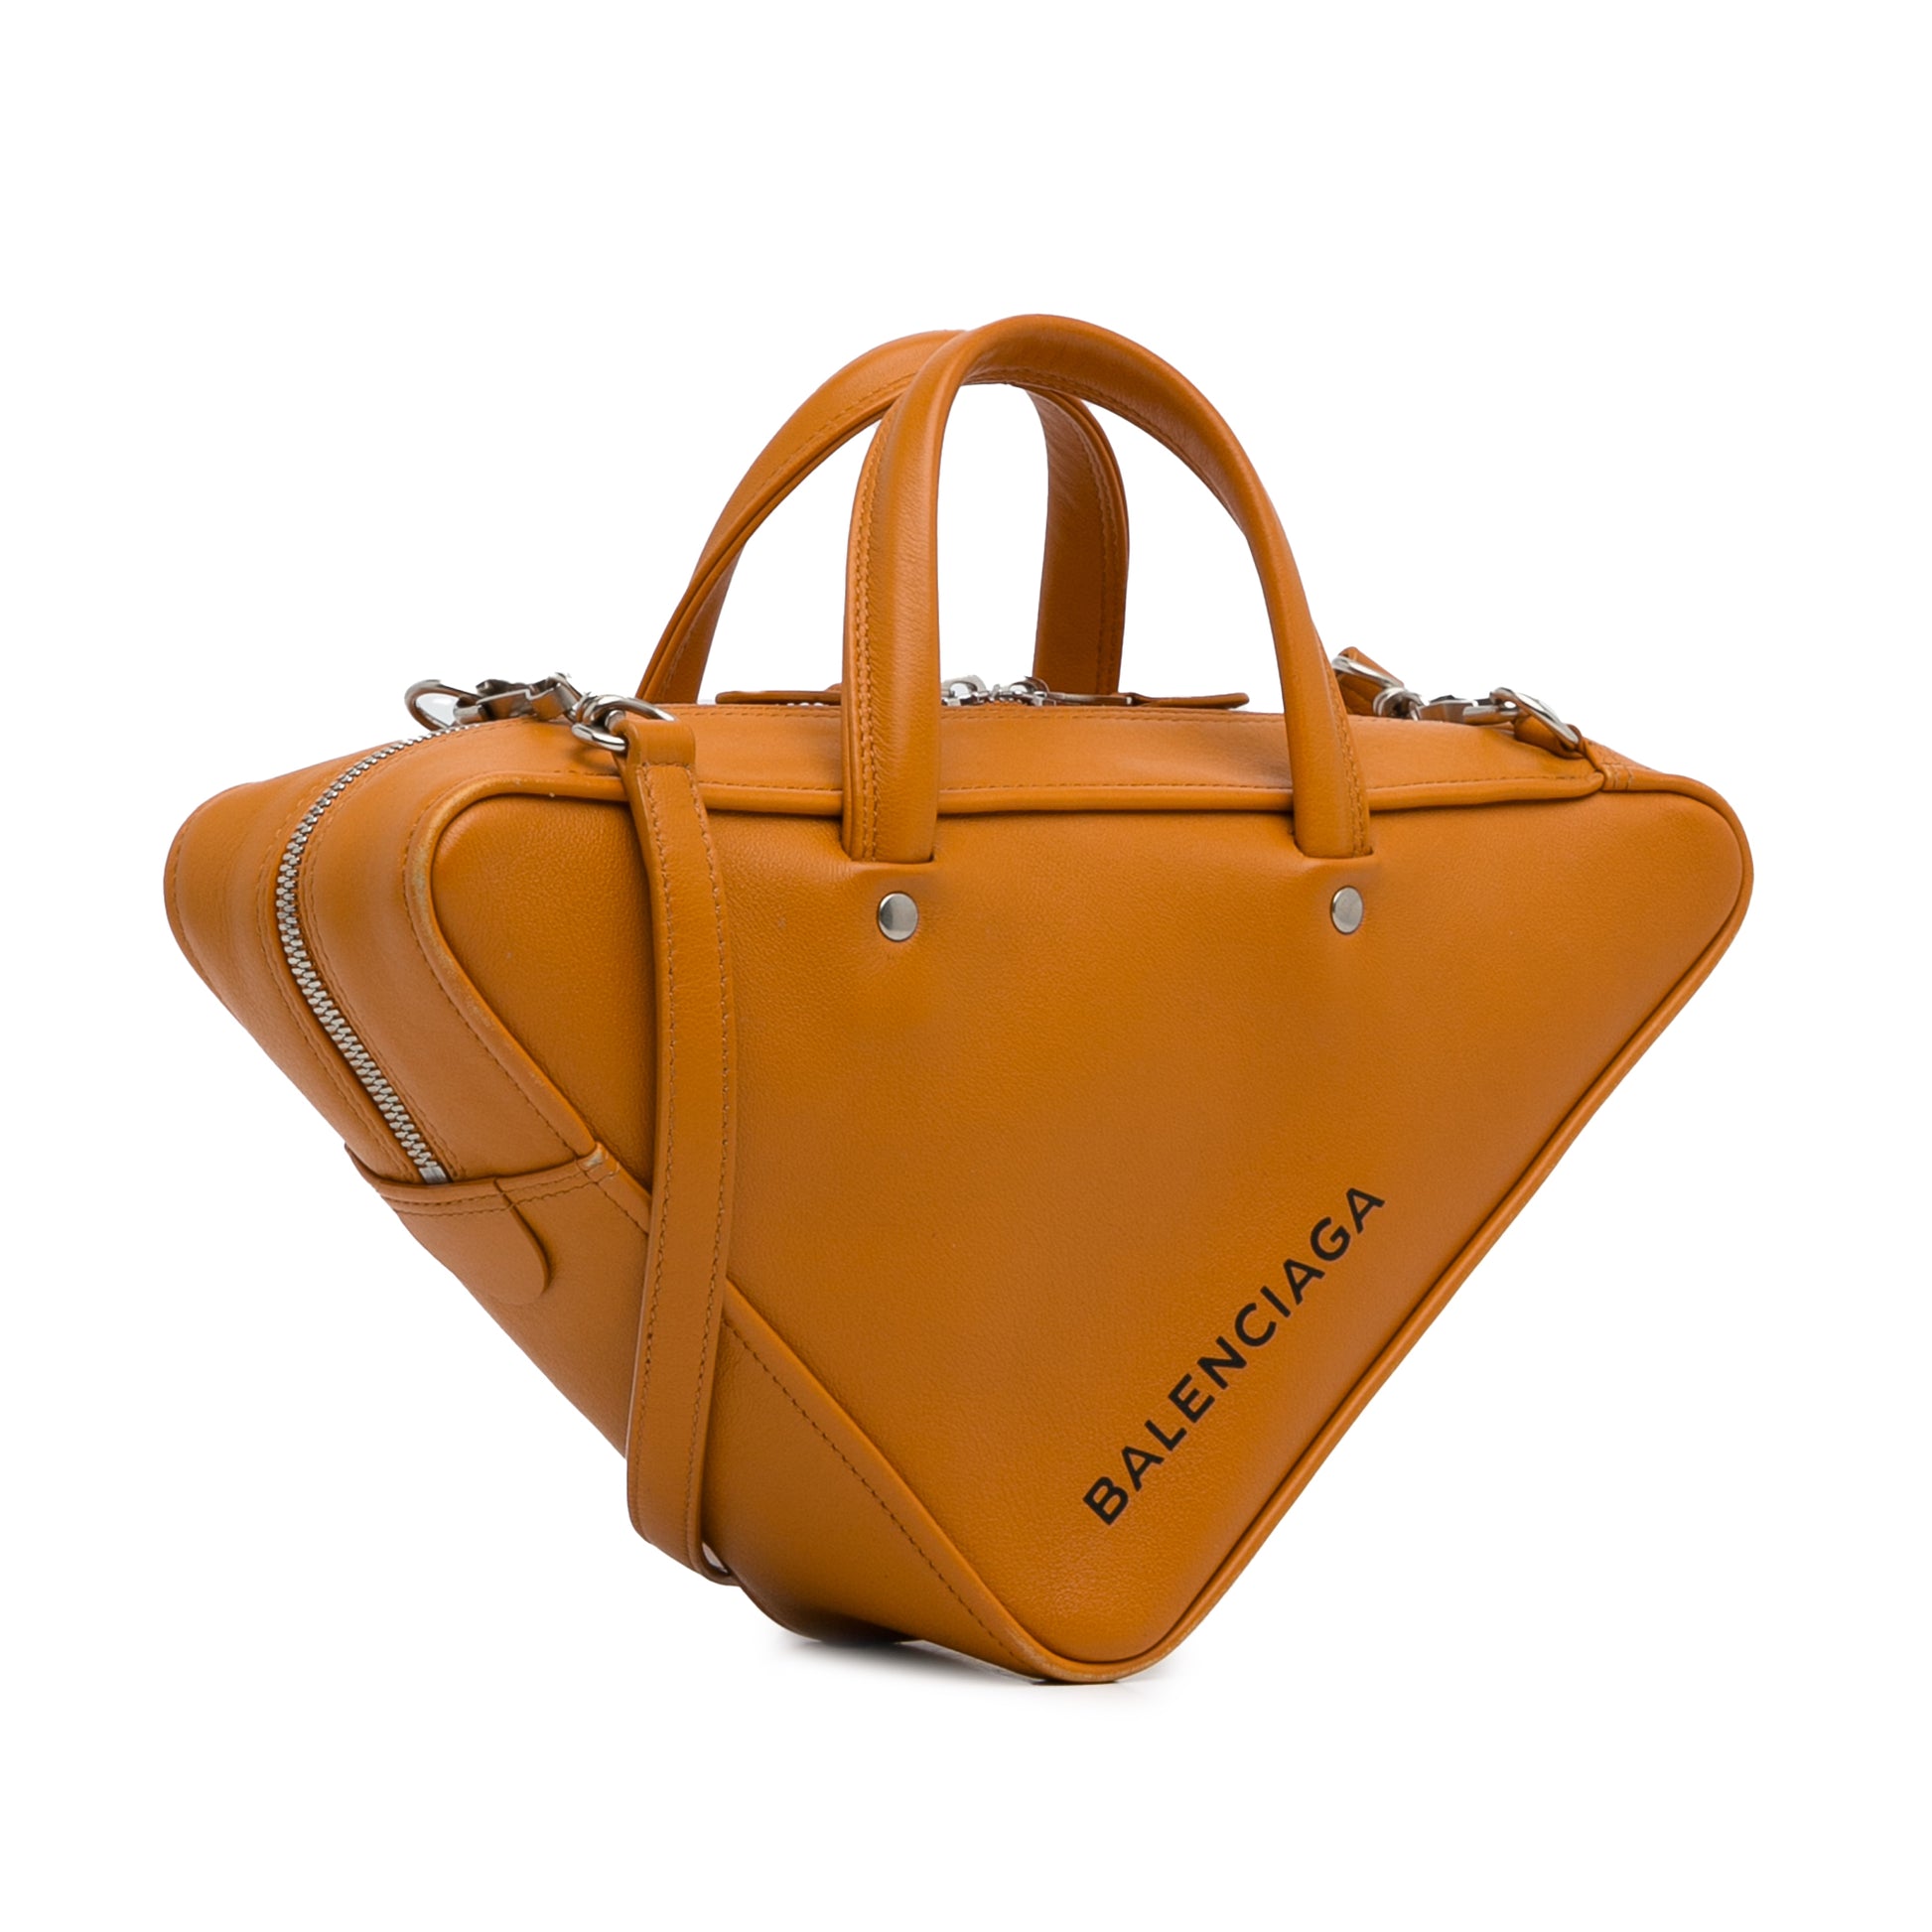 S Triangle Duffle Bag Orange - Gaby Paris